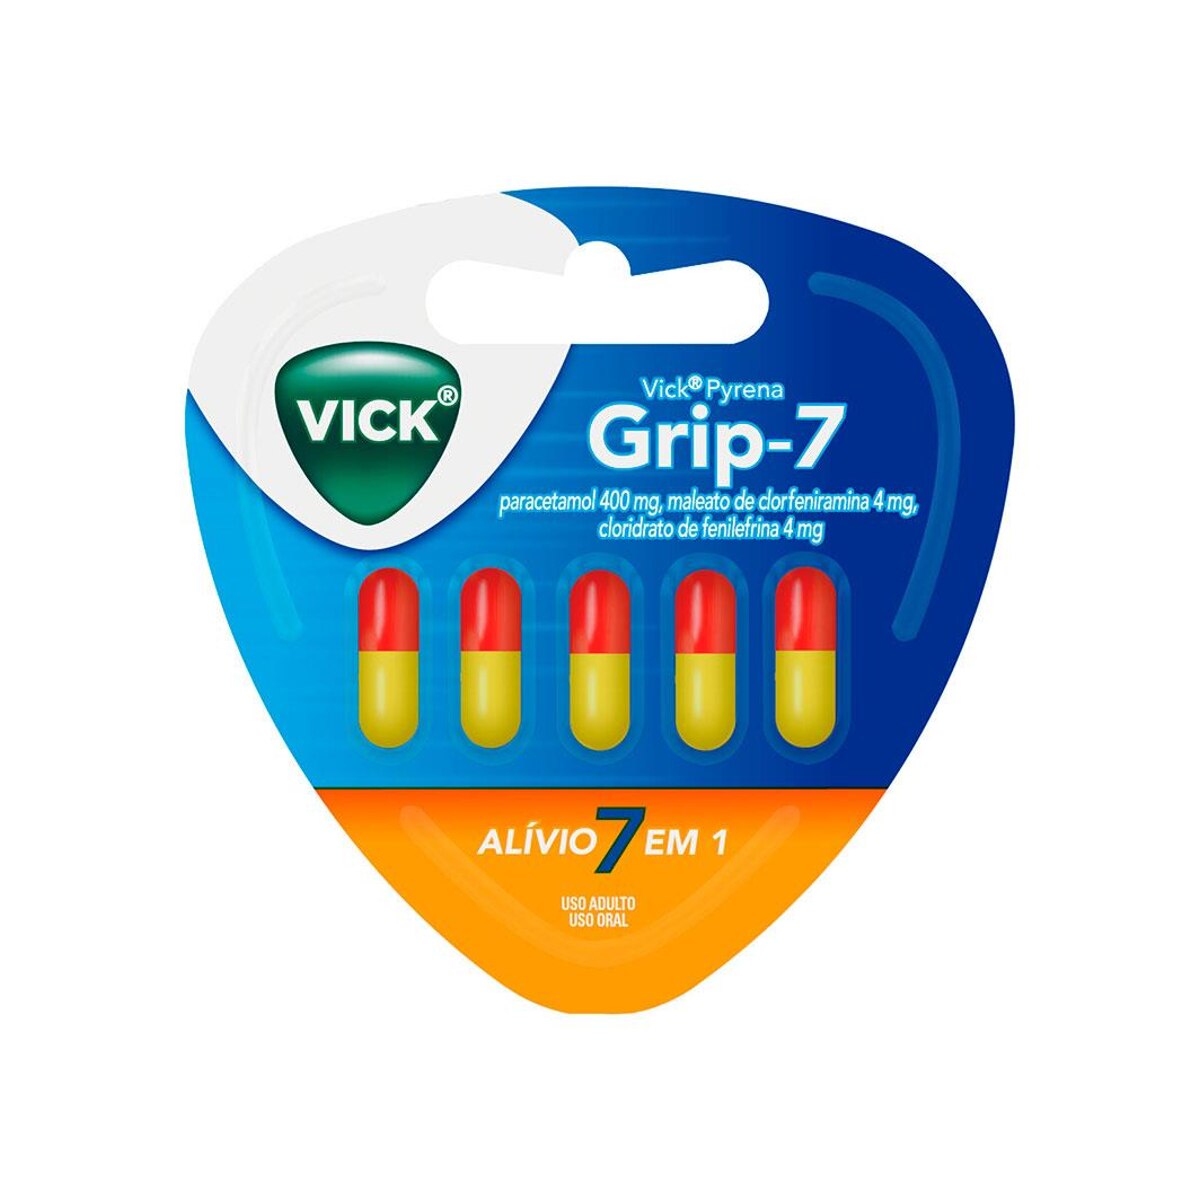 Vick Pyrena Grip-7 5 Capsulas